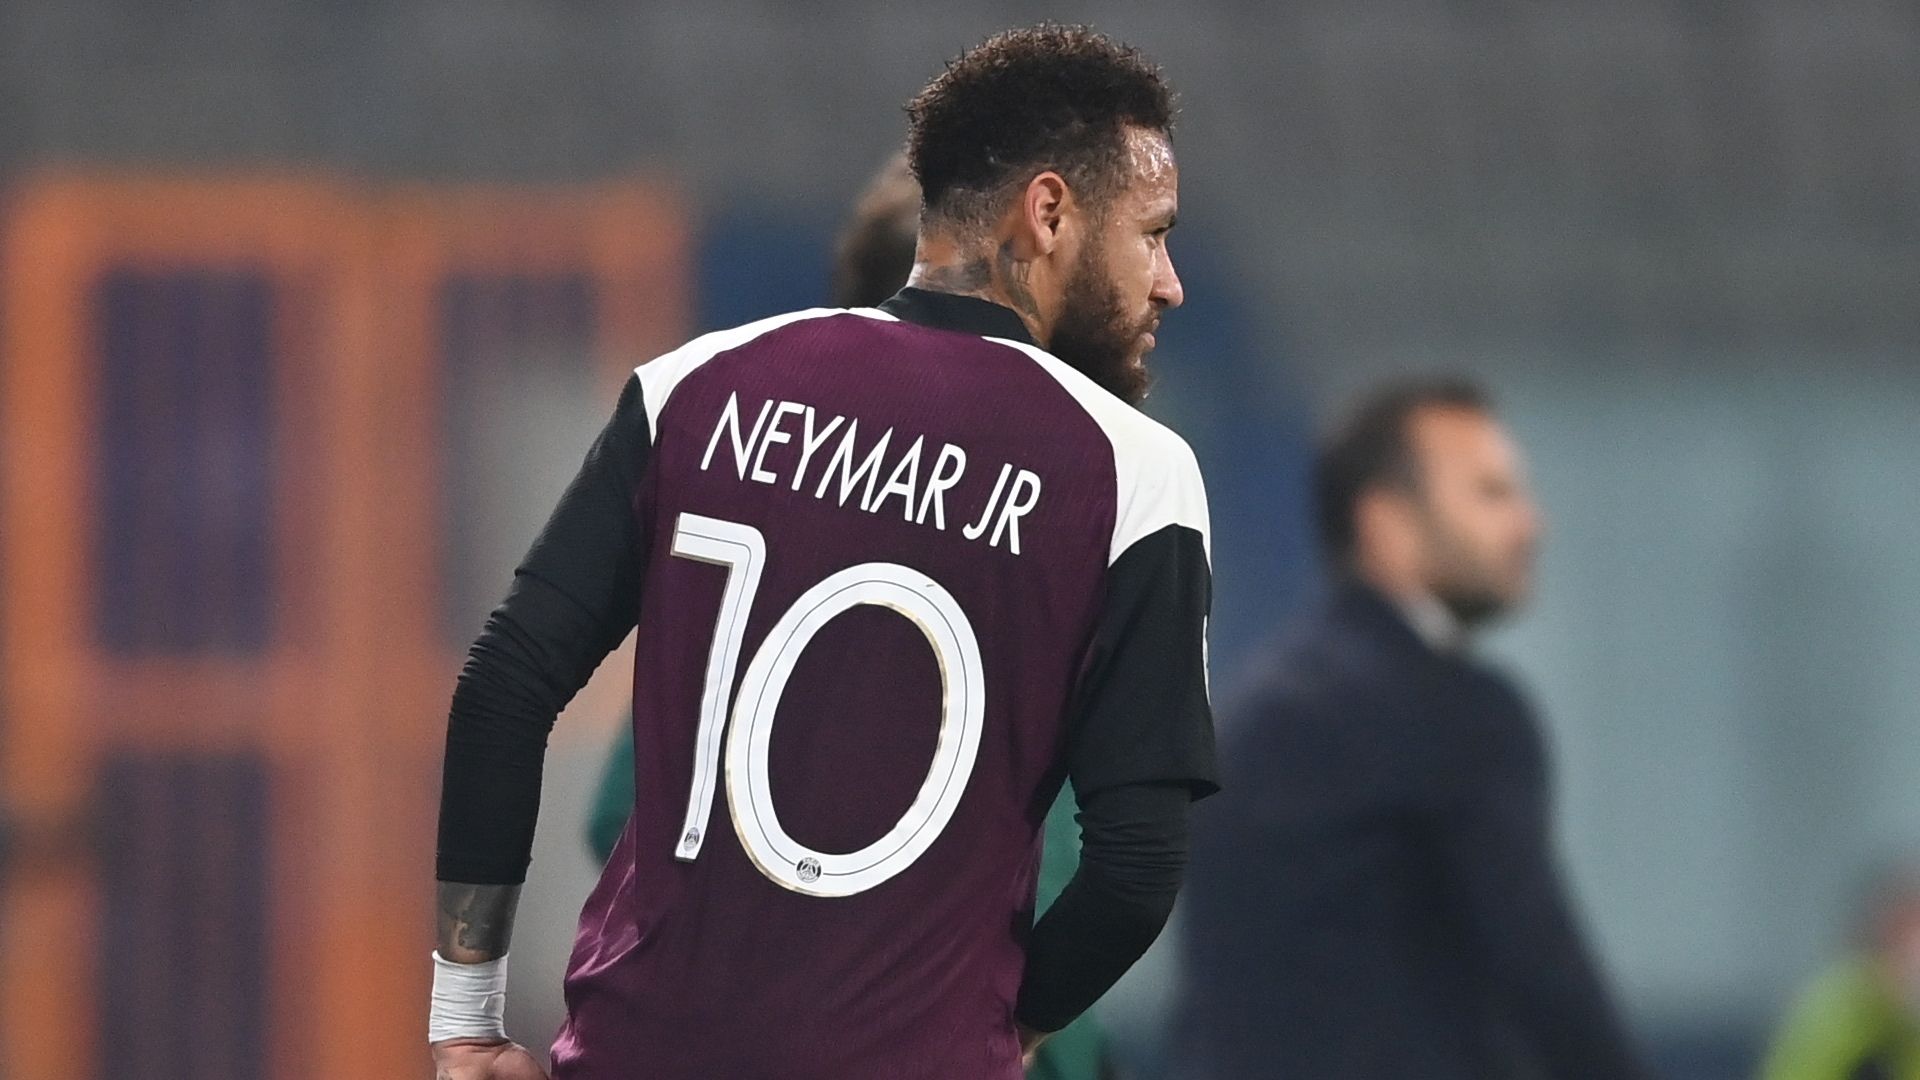 Neymar could miss PSG's next few games through injury, fears Tuchel